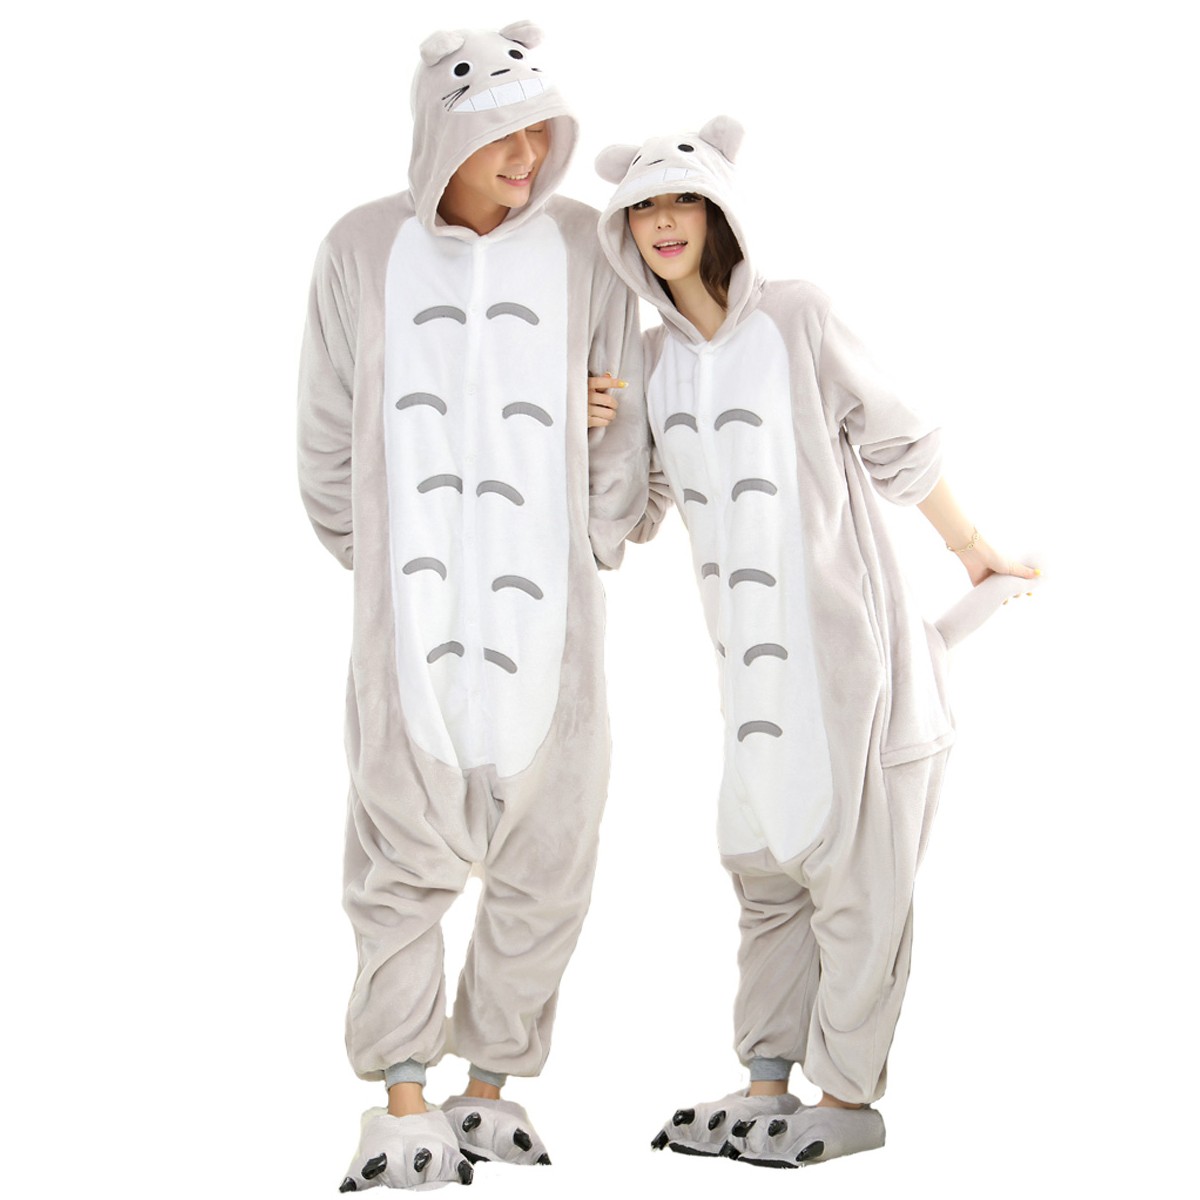 Totoro Onesie, Totoro Pajamas For Adult Buy Now